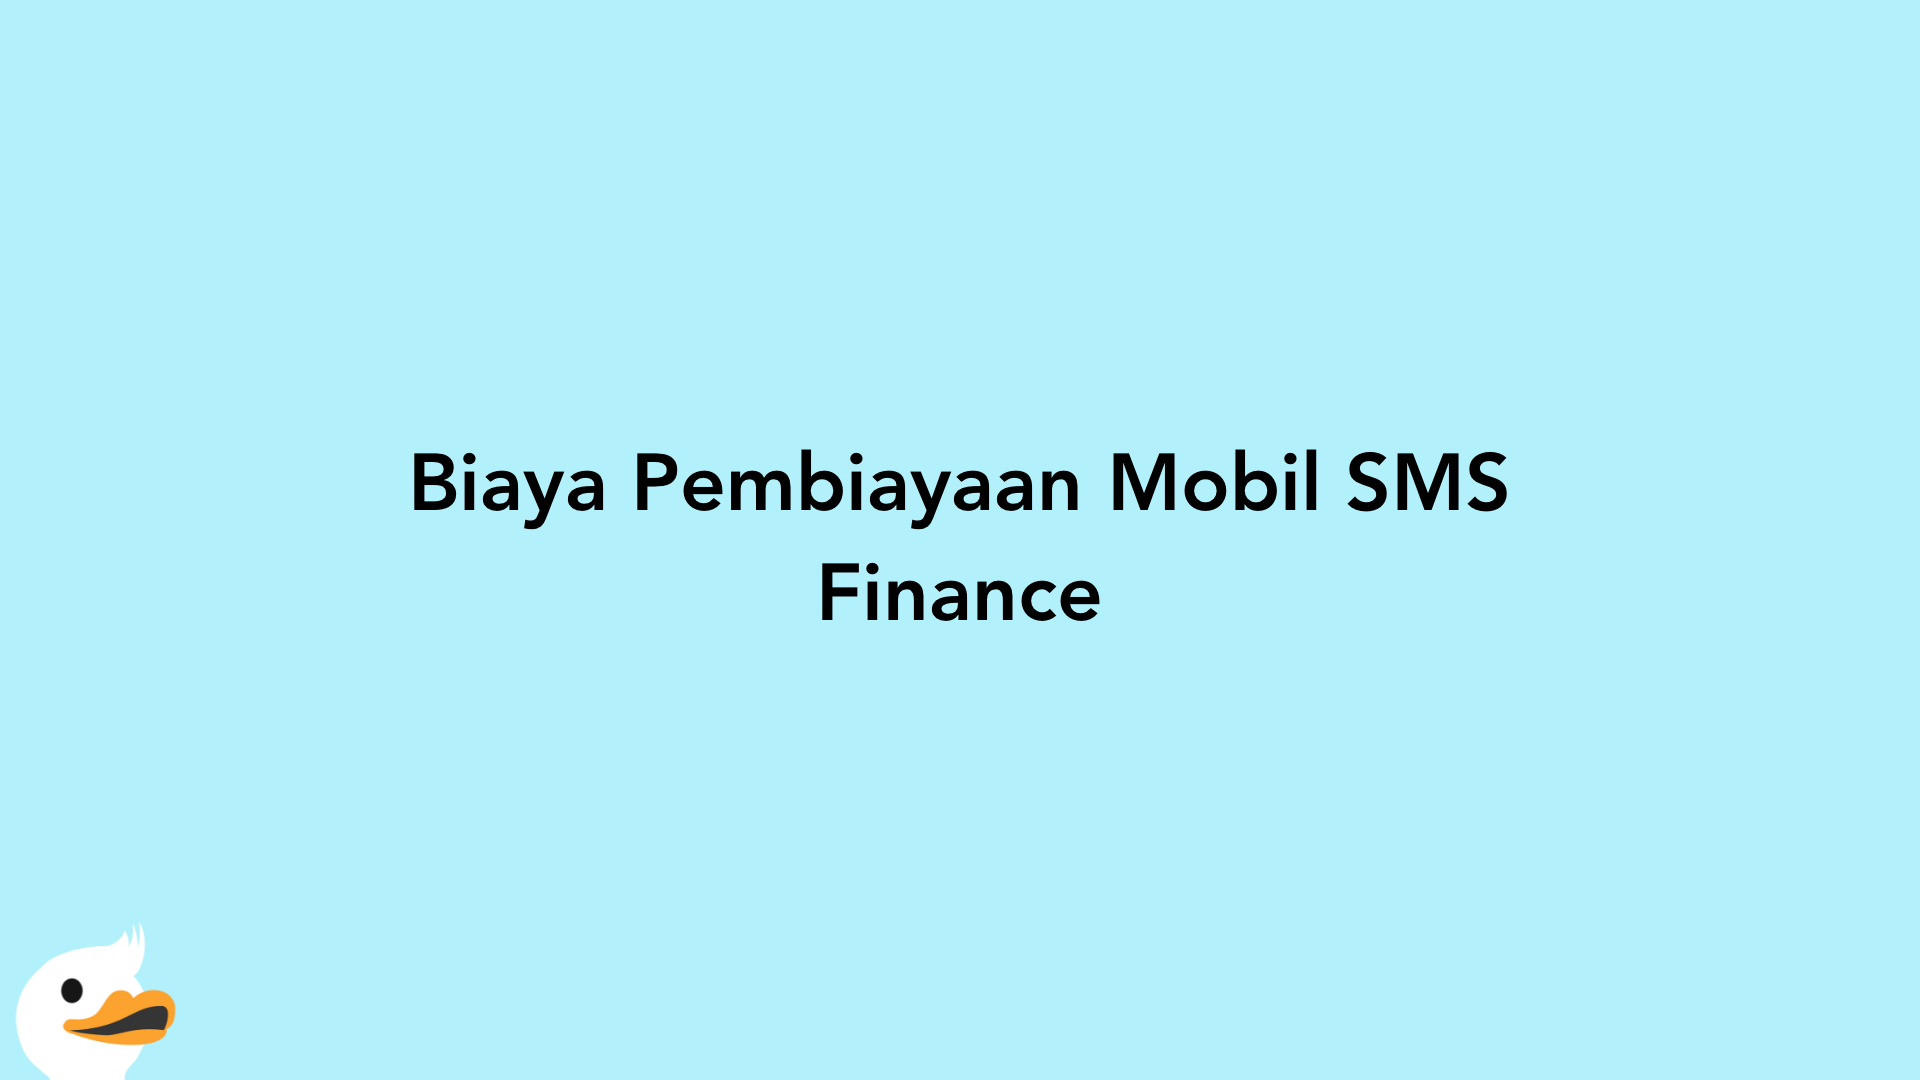 Biaya Pembiayaan Mobil SMS Finance